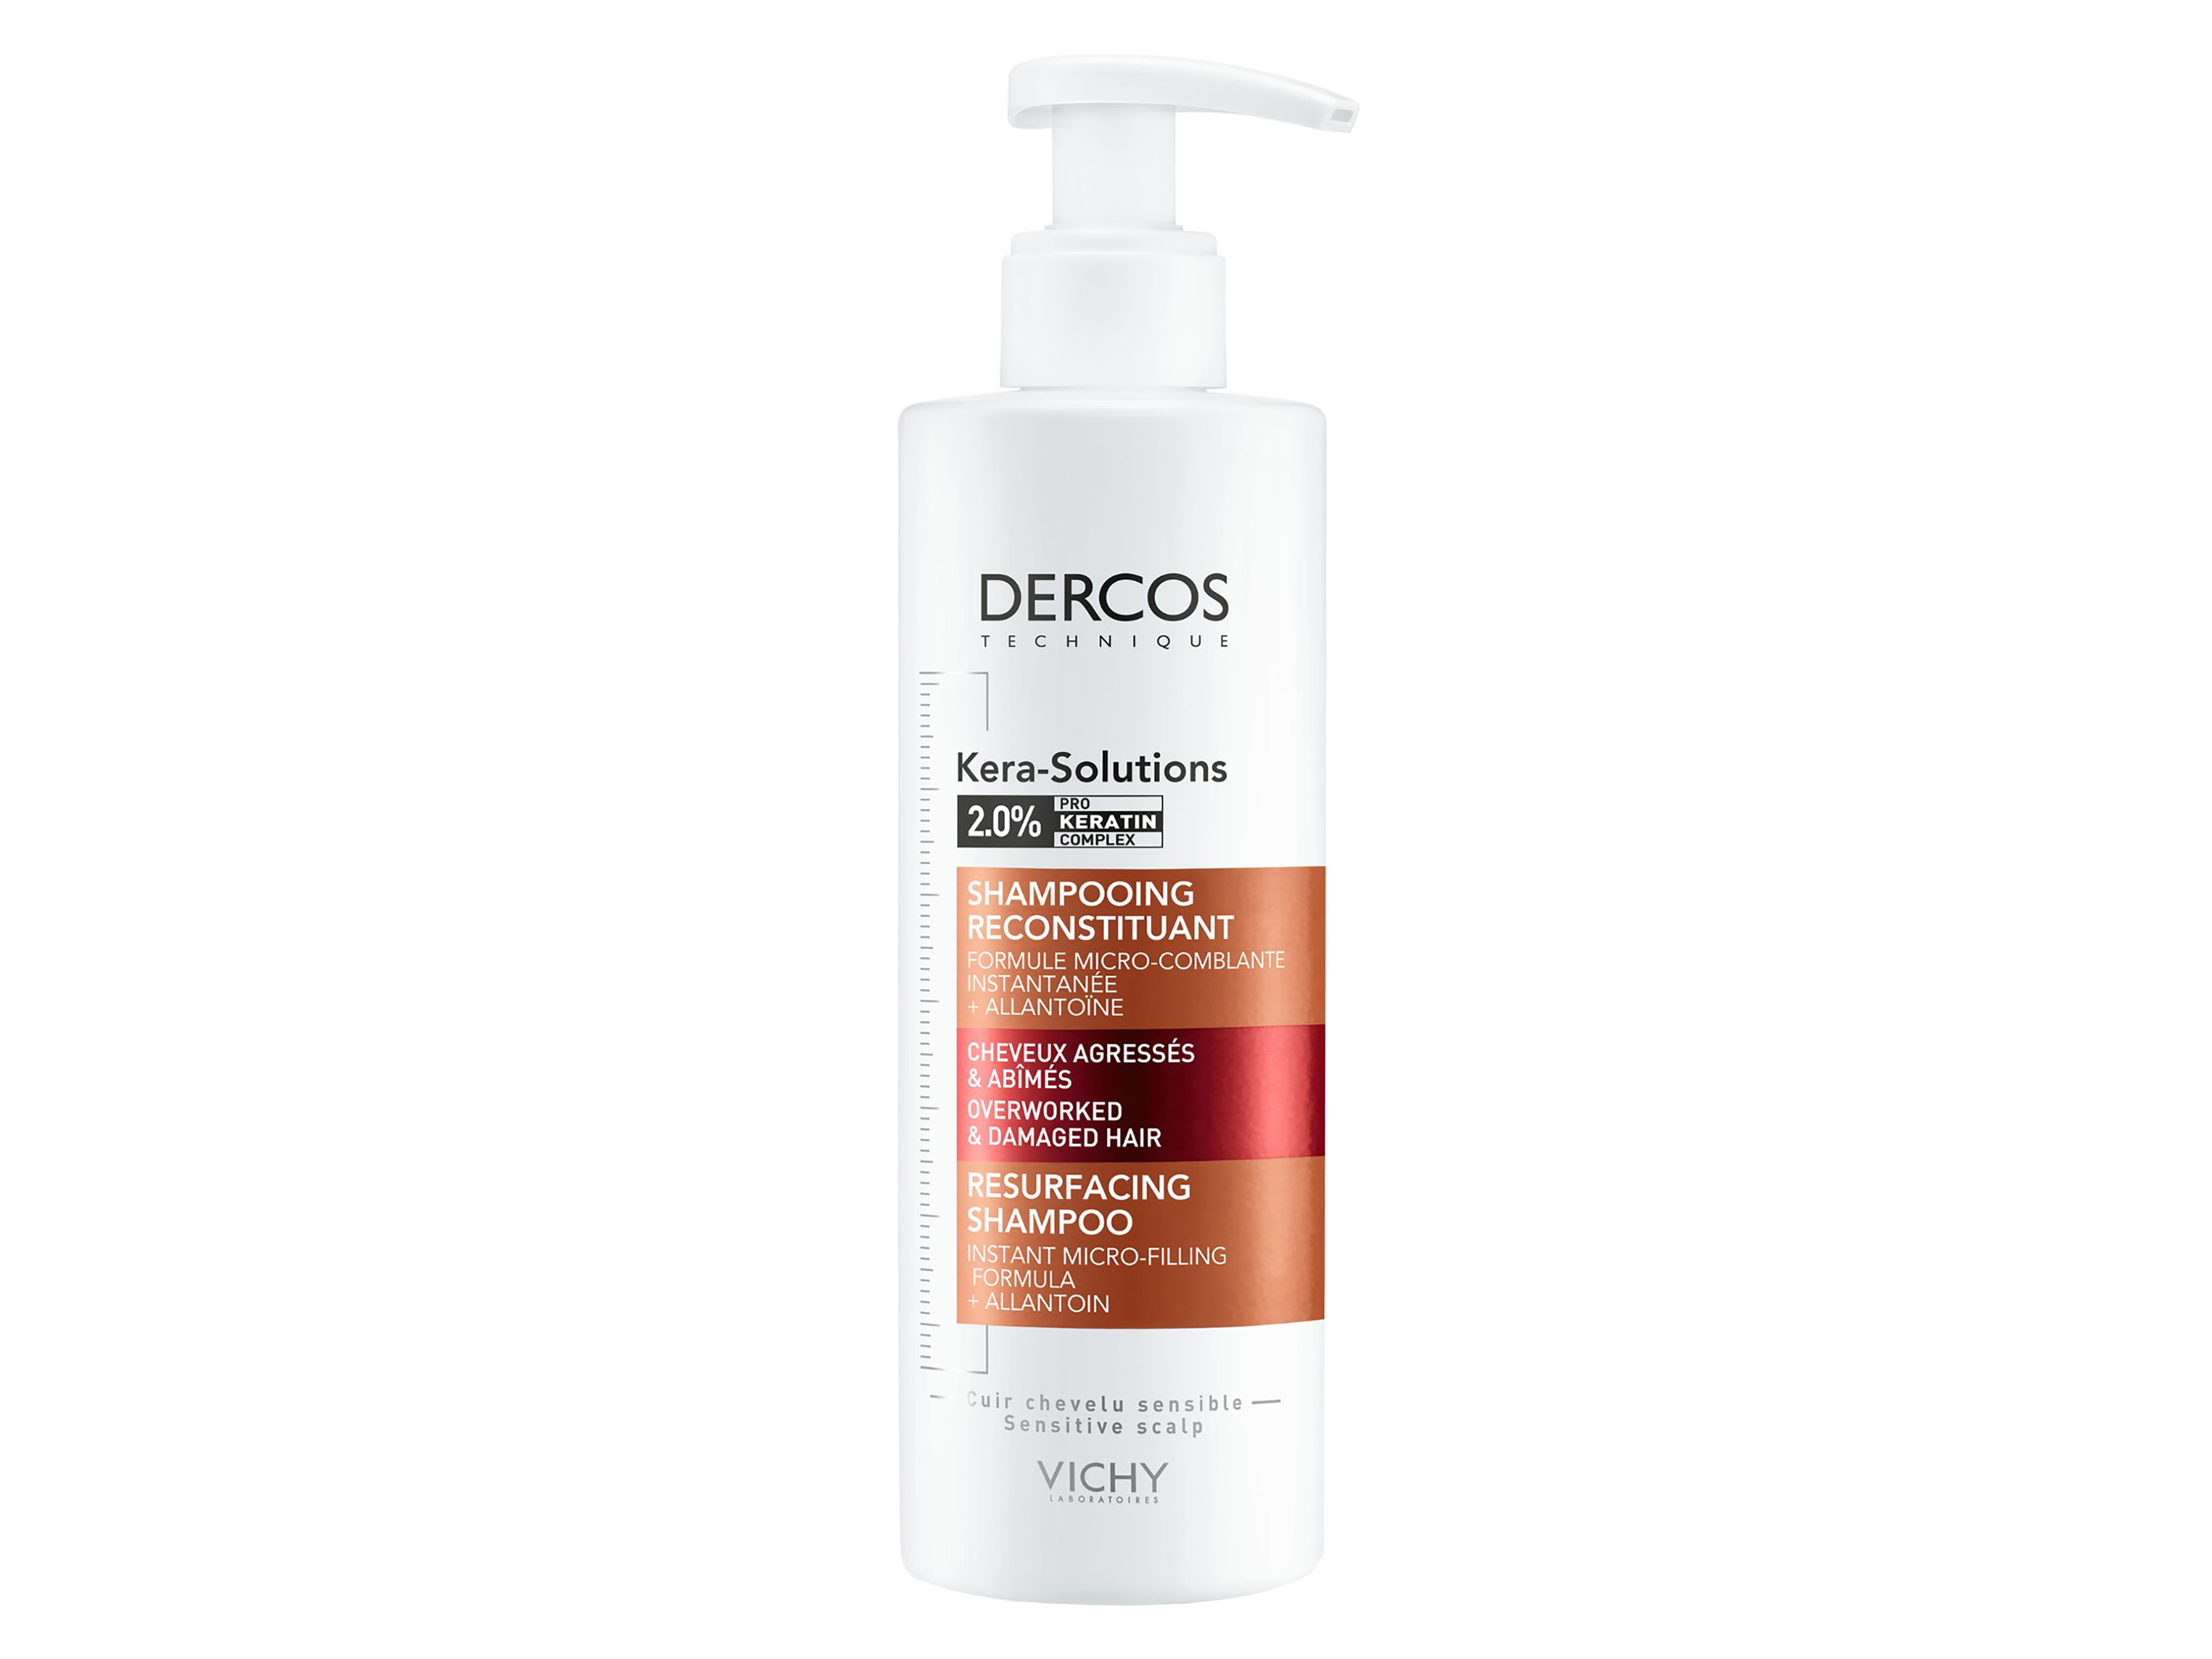 Vichy Dercos Kera-Solutions Resurfacing, 250 ml